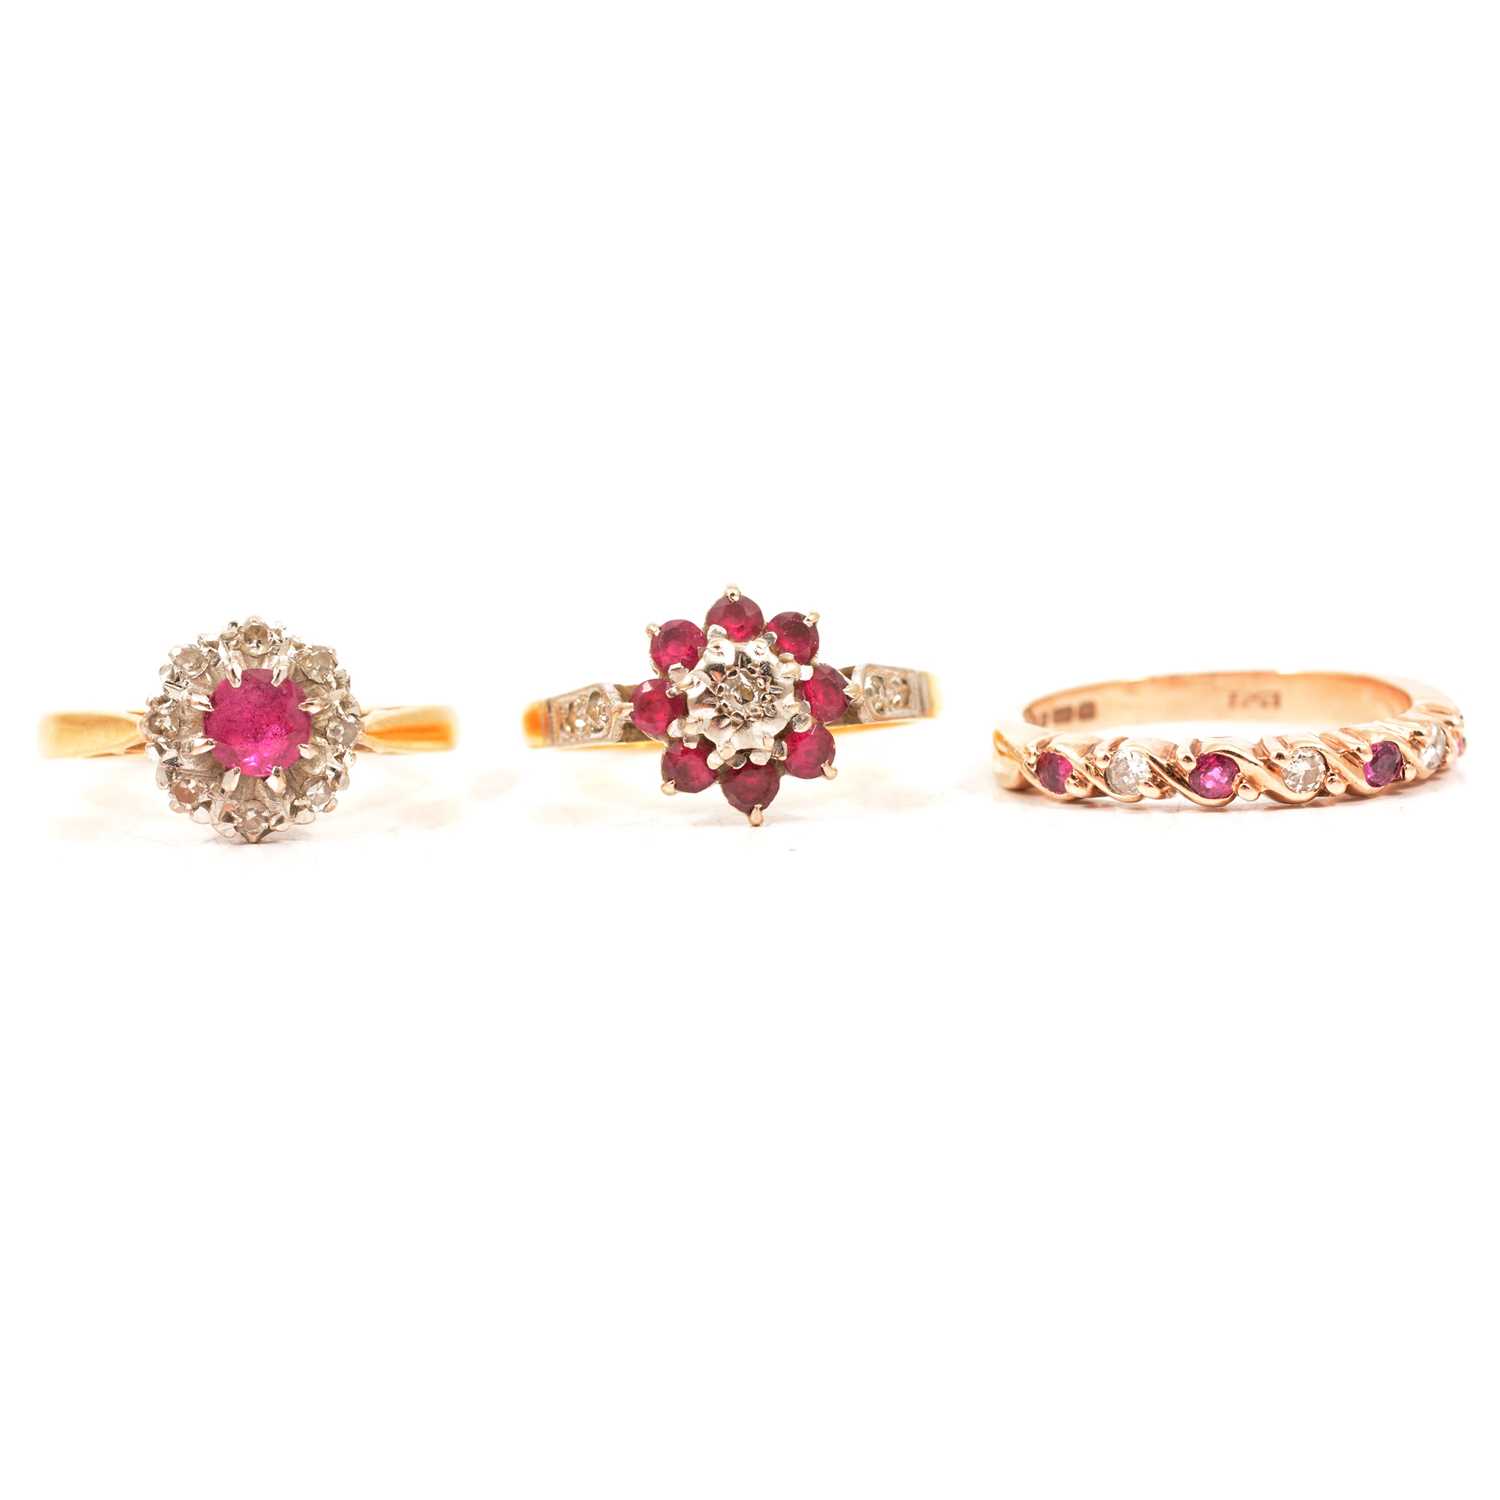 Three ruby and diamond rings.